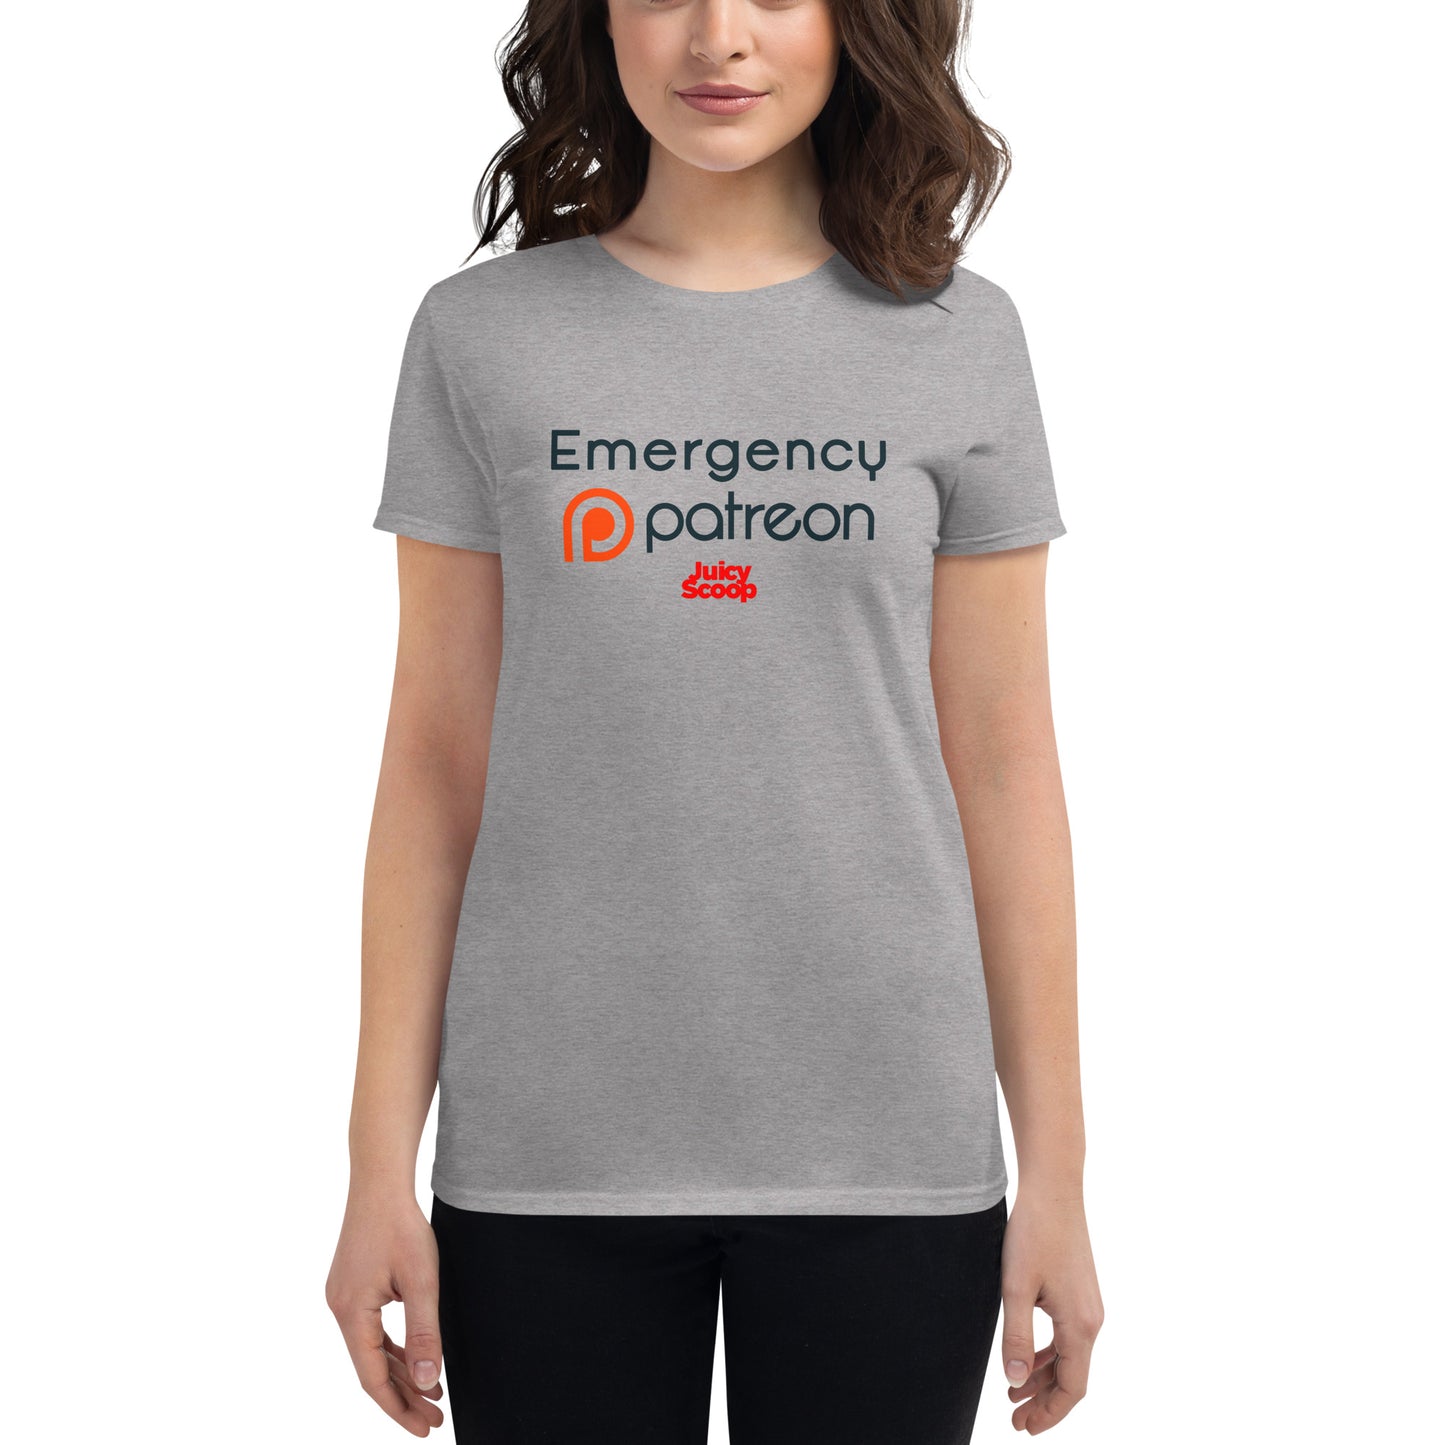 Emergency Patreon Juicy Scoop Women's Short Sleeve T-Shirt